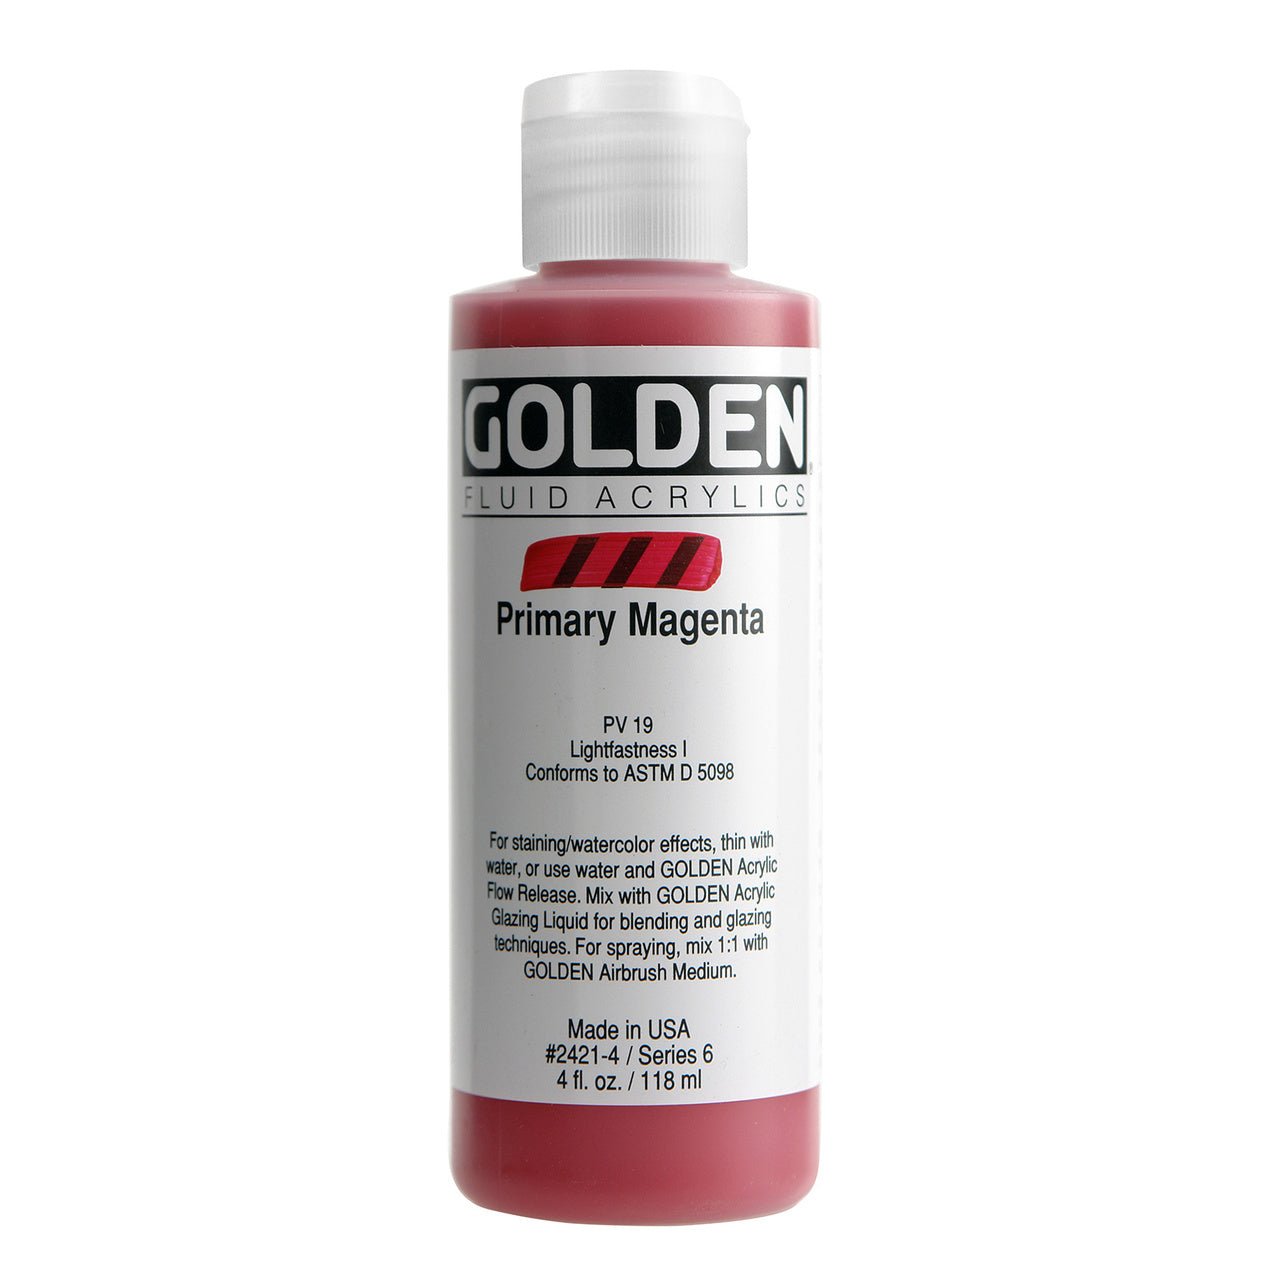 Golden Fluid Acrylic Primary Magenta 4 oz - merriartist.com